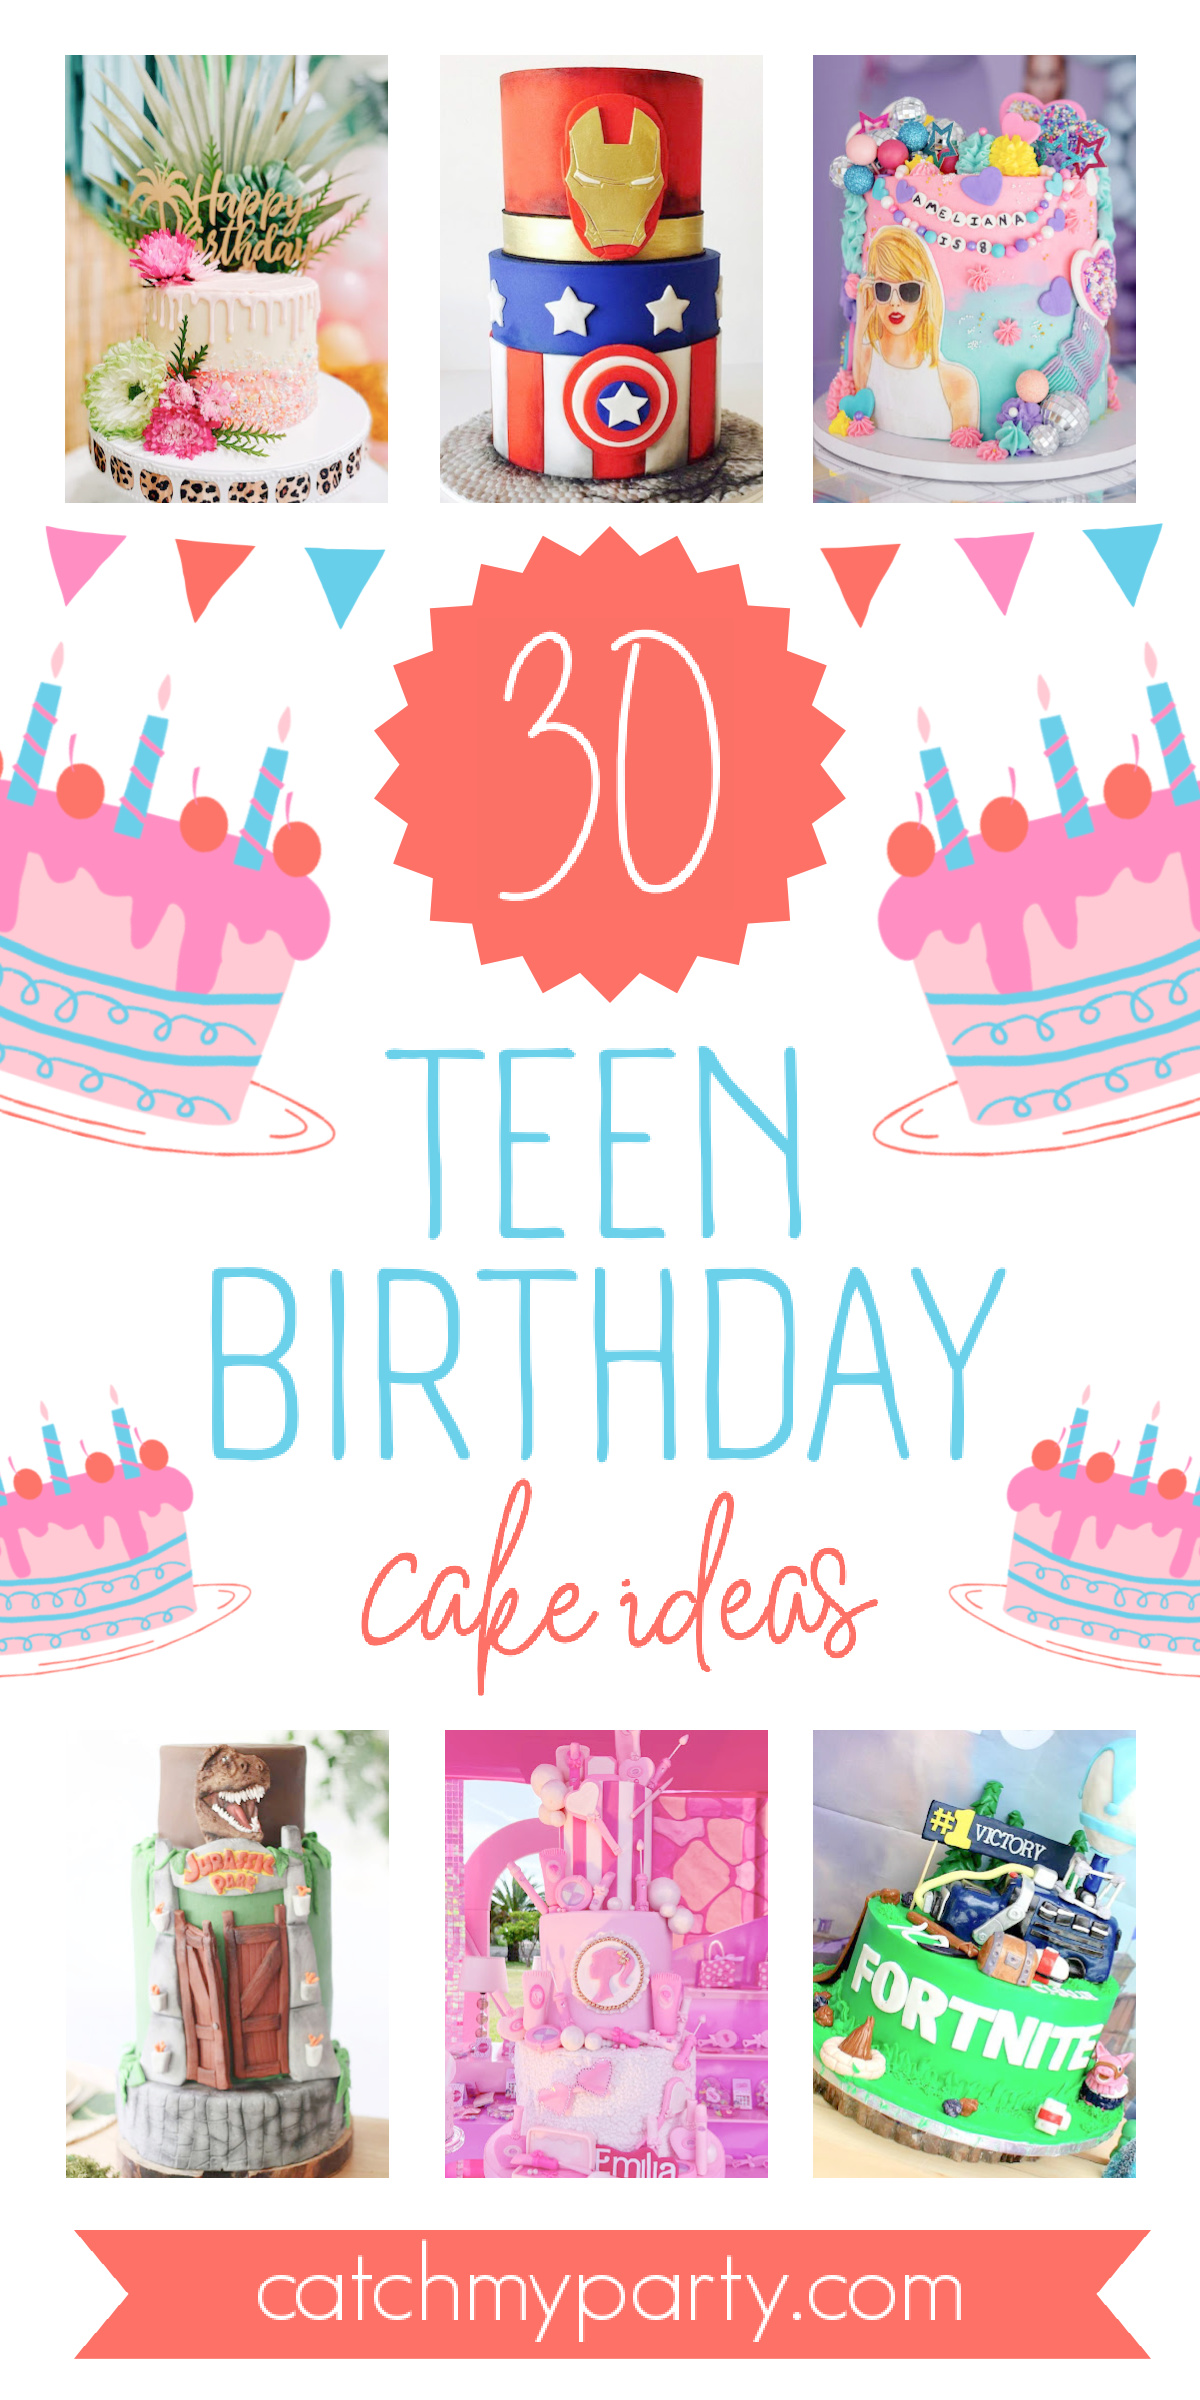 30 Excellent Teen Birthday Cake Ideas!